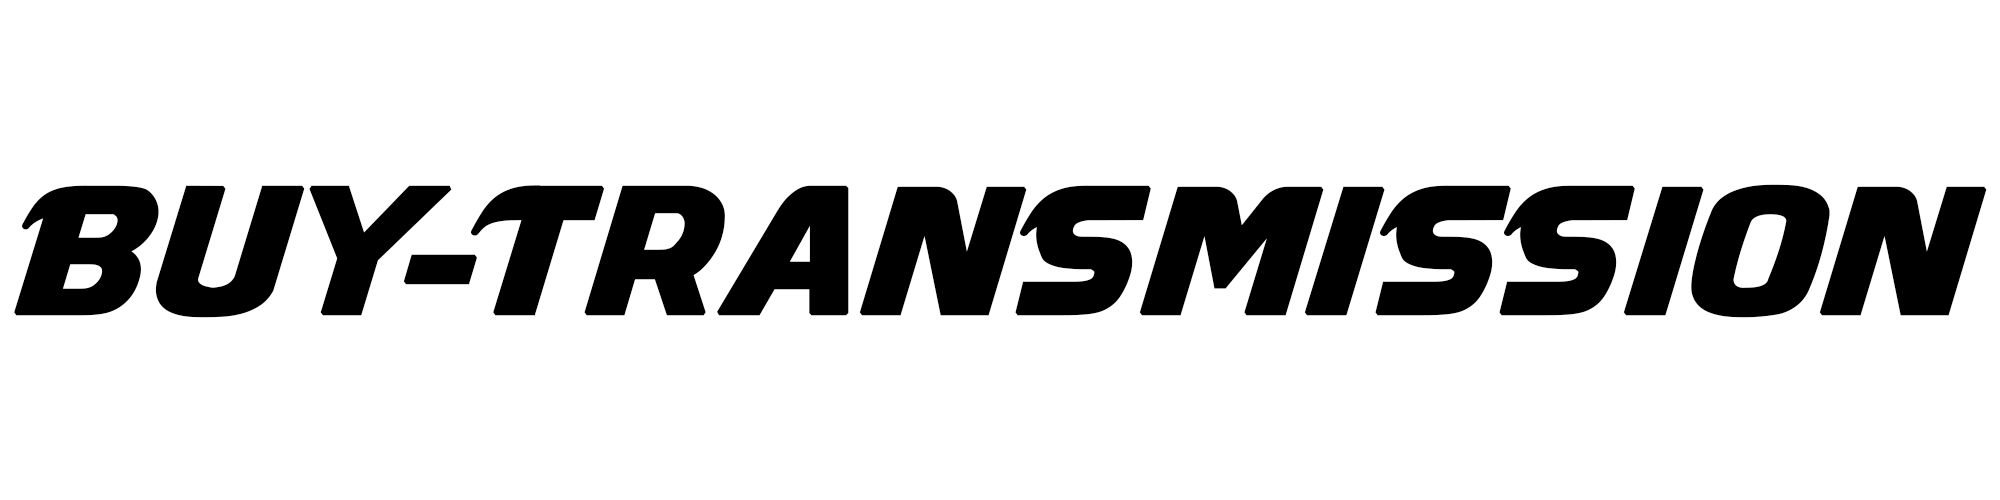 quality used transmission